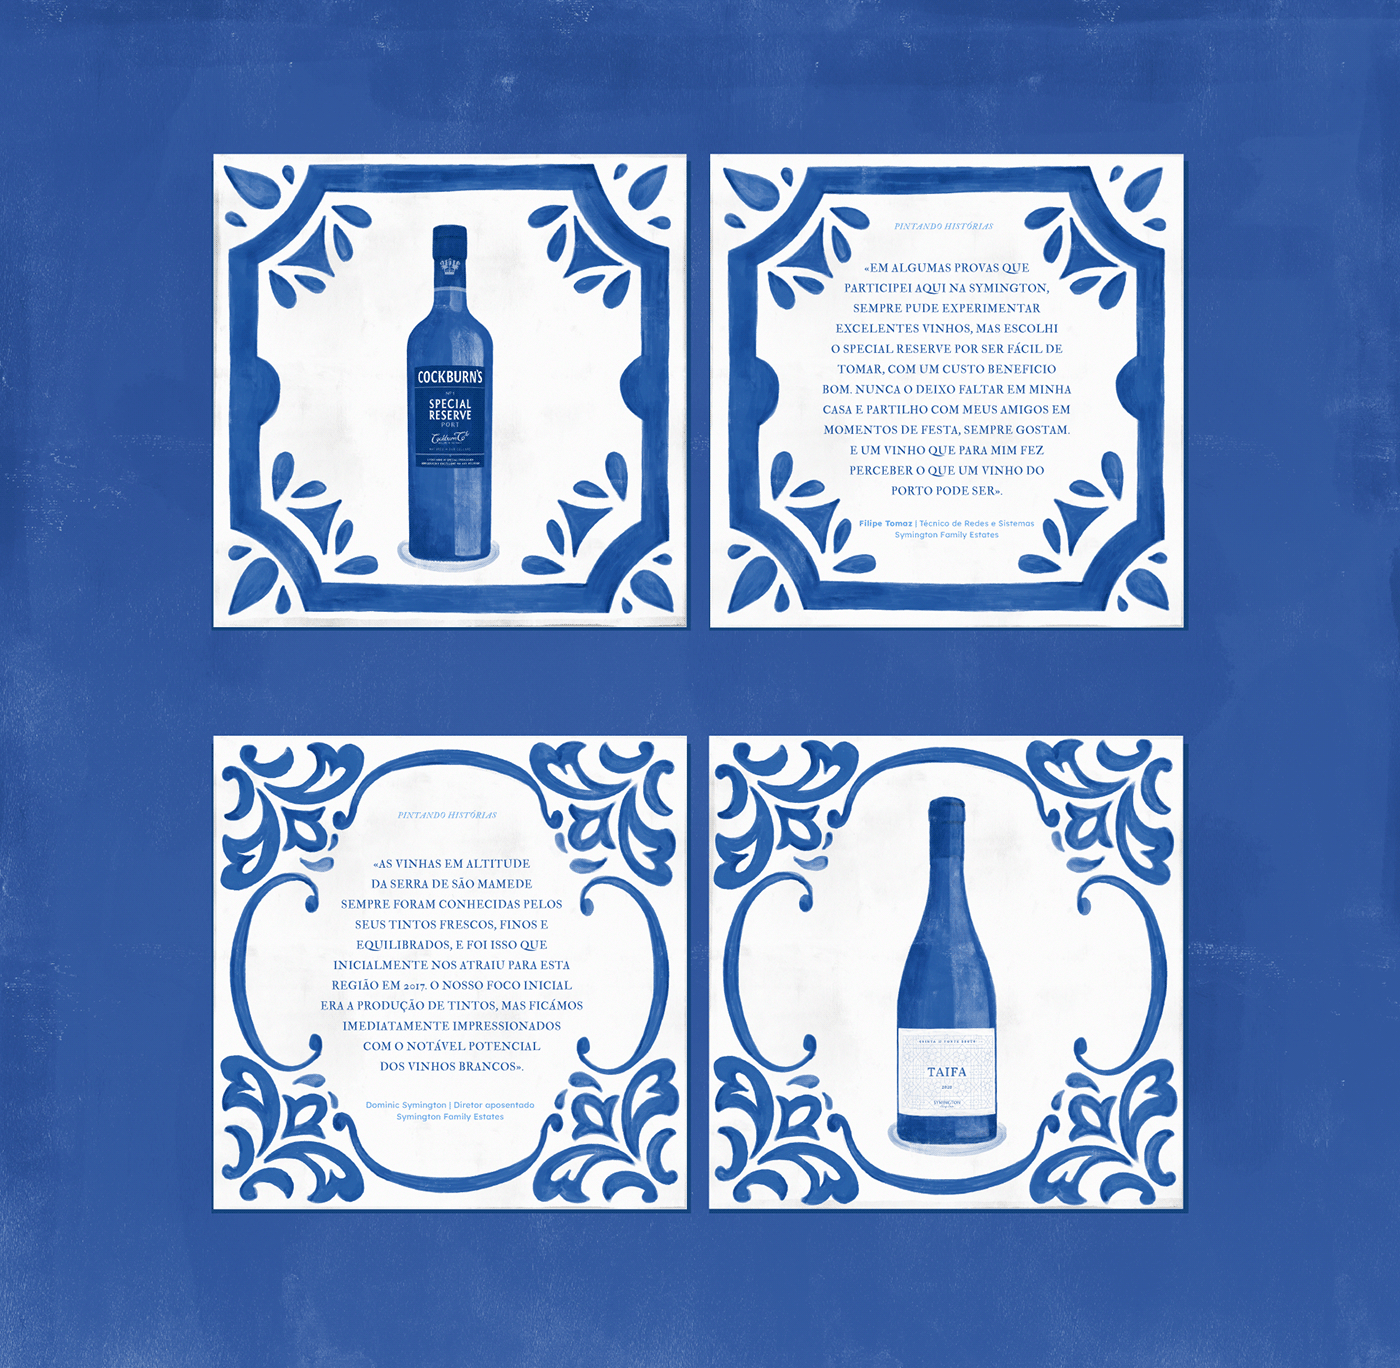 drink wine tiles azulejo Portugal blue bottle ILLUSTRATION  Digital Art  Drawing 